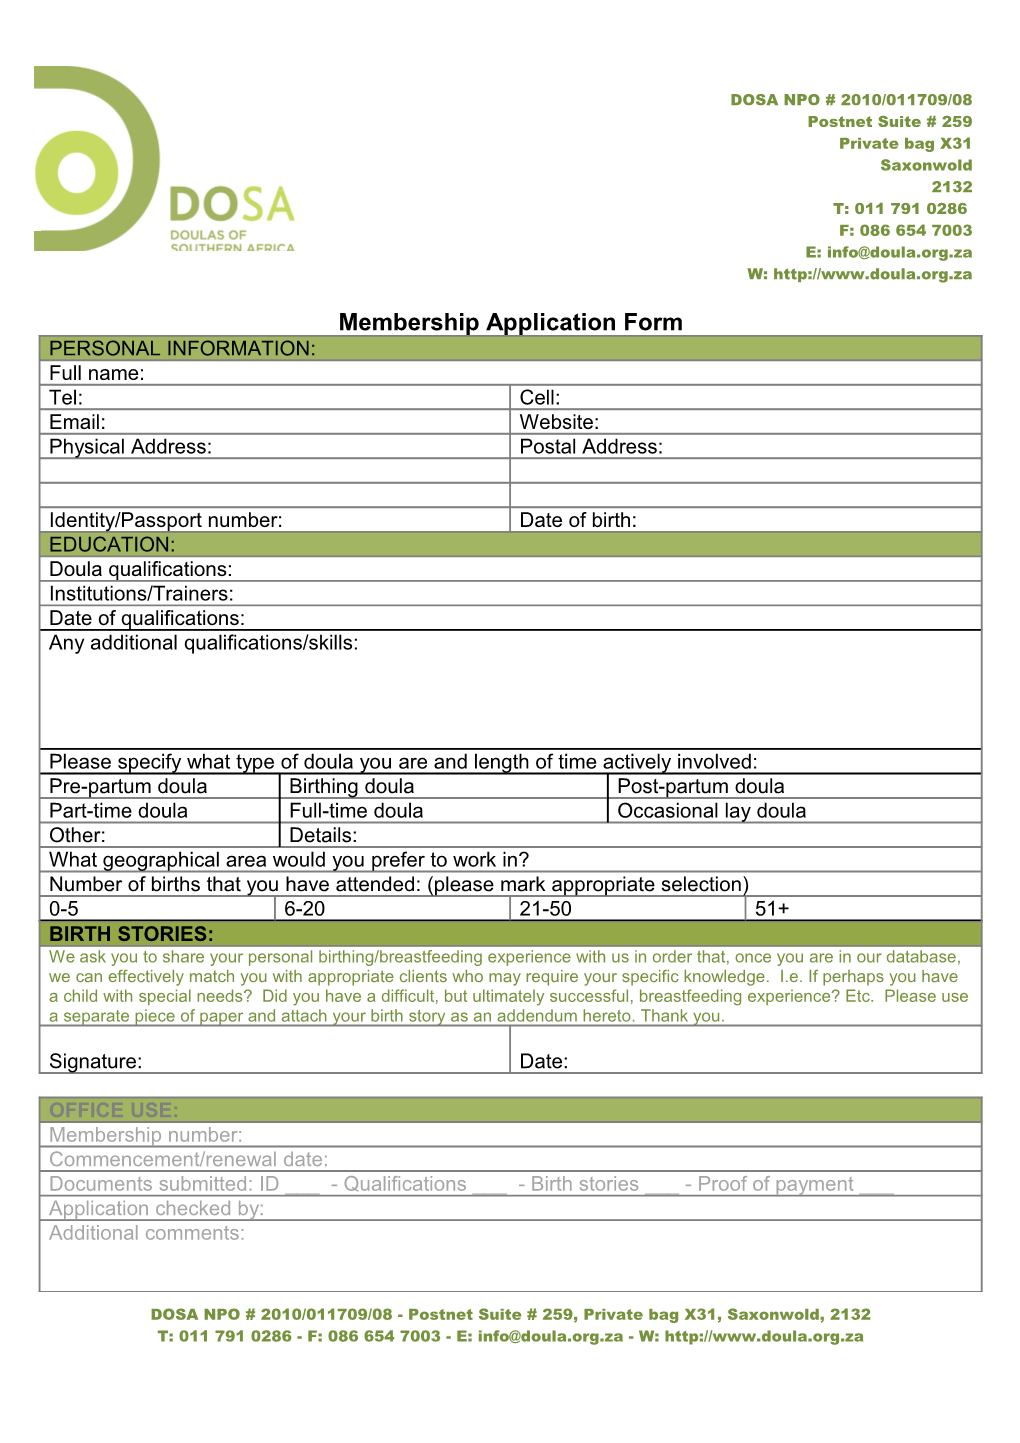 Membership Application Form s22